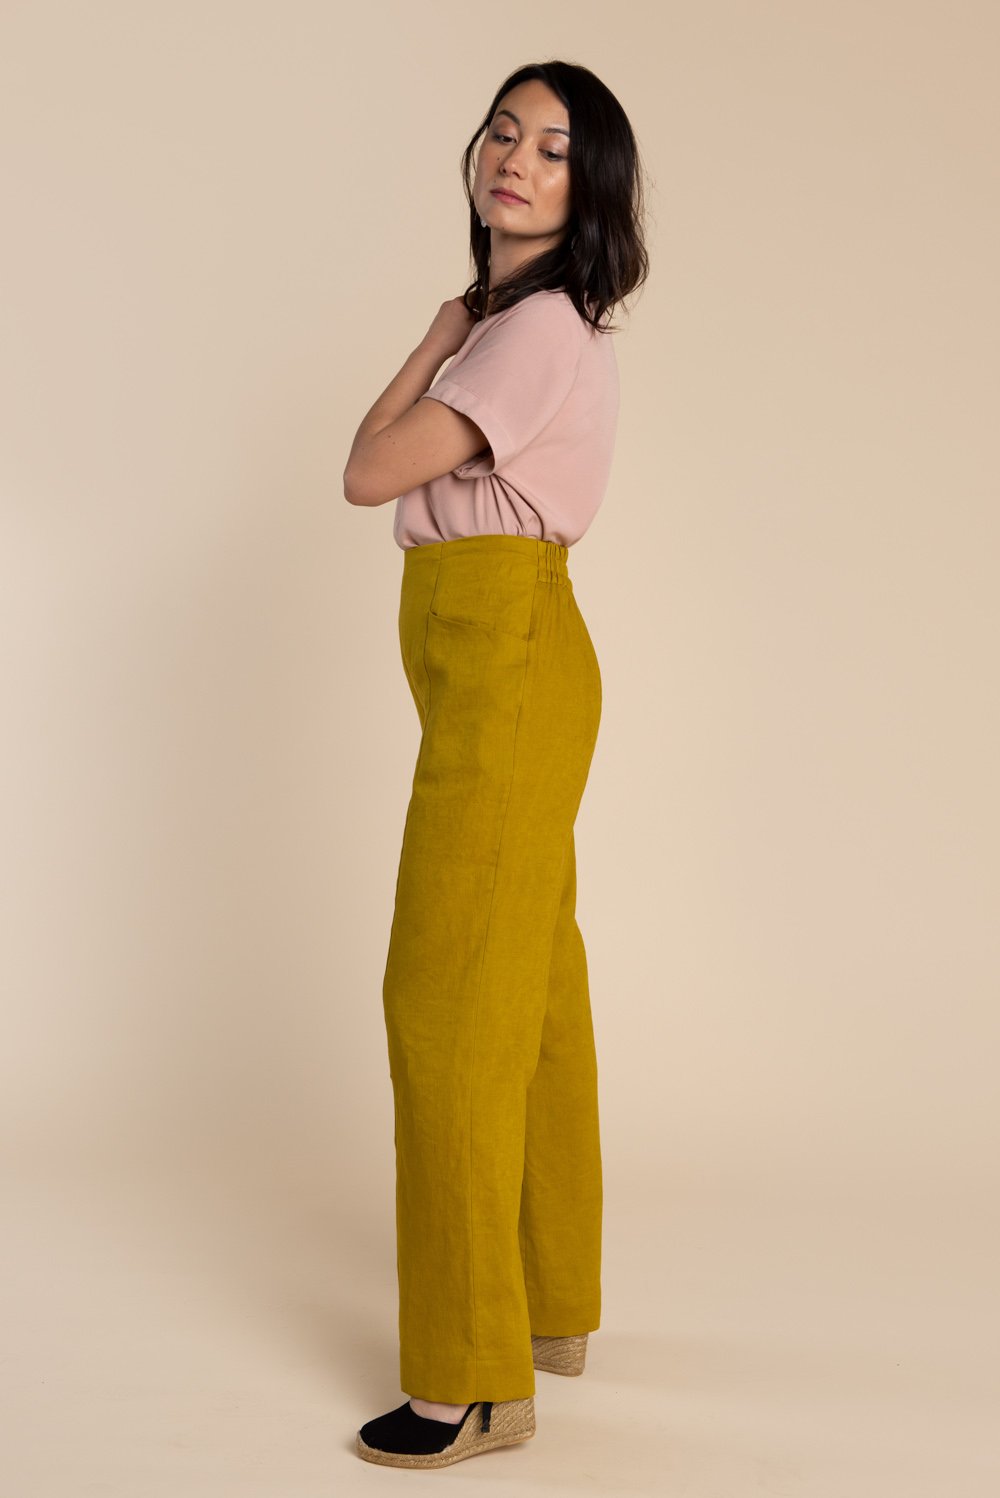 NWT Zara Women's Knit Shorts Knit Shorts Striped Multicolor Bloggers  Favorite